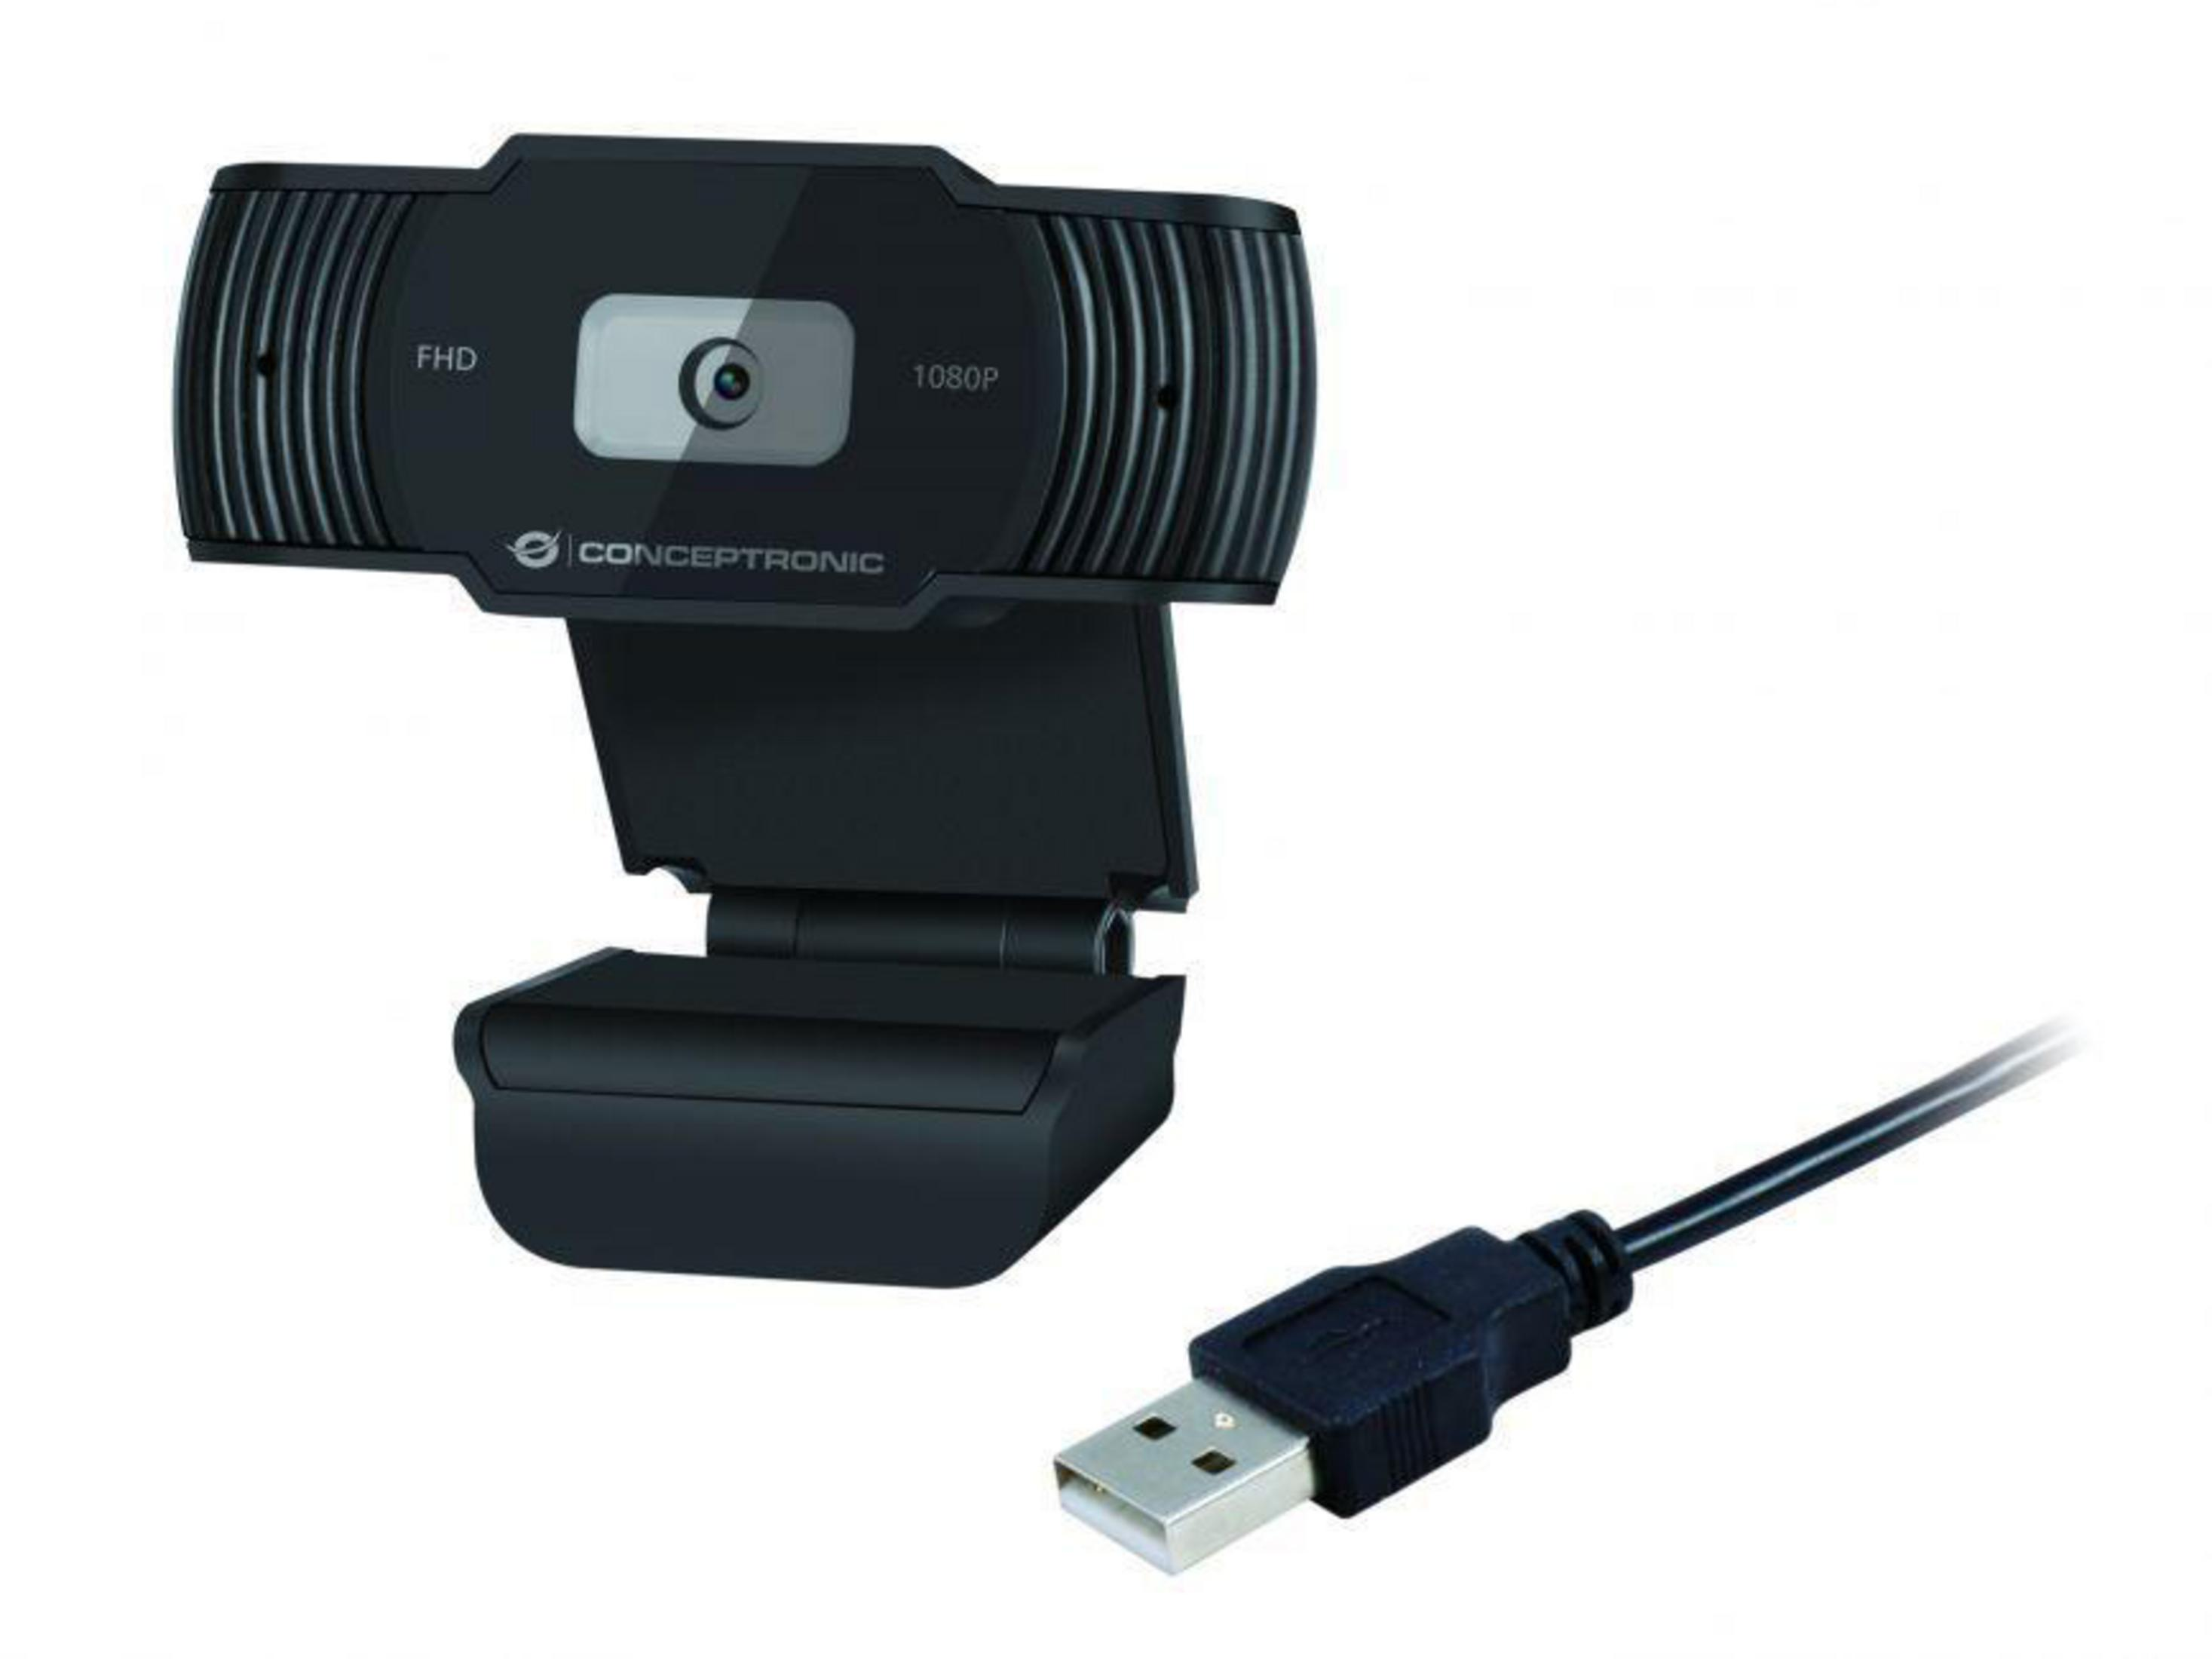 FULL Webcam 1080P HD AMDIS04B CONCEPTRONIC